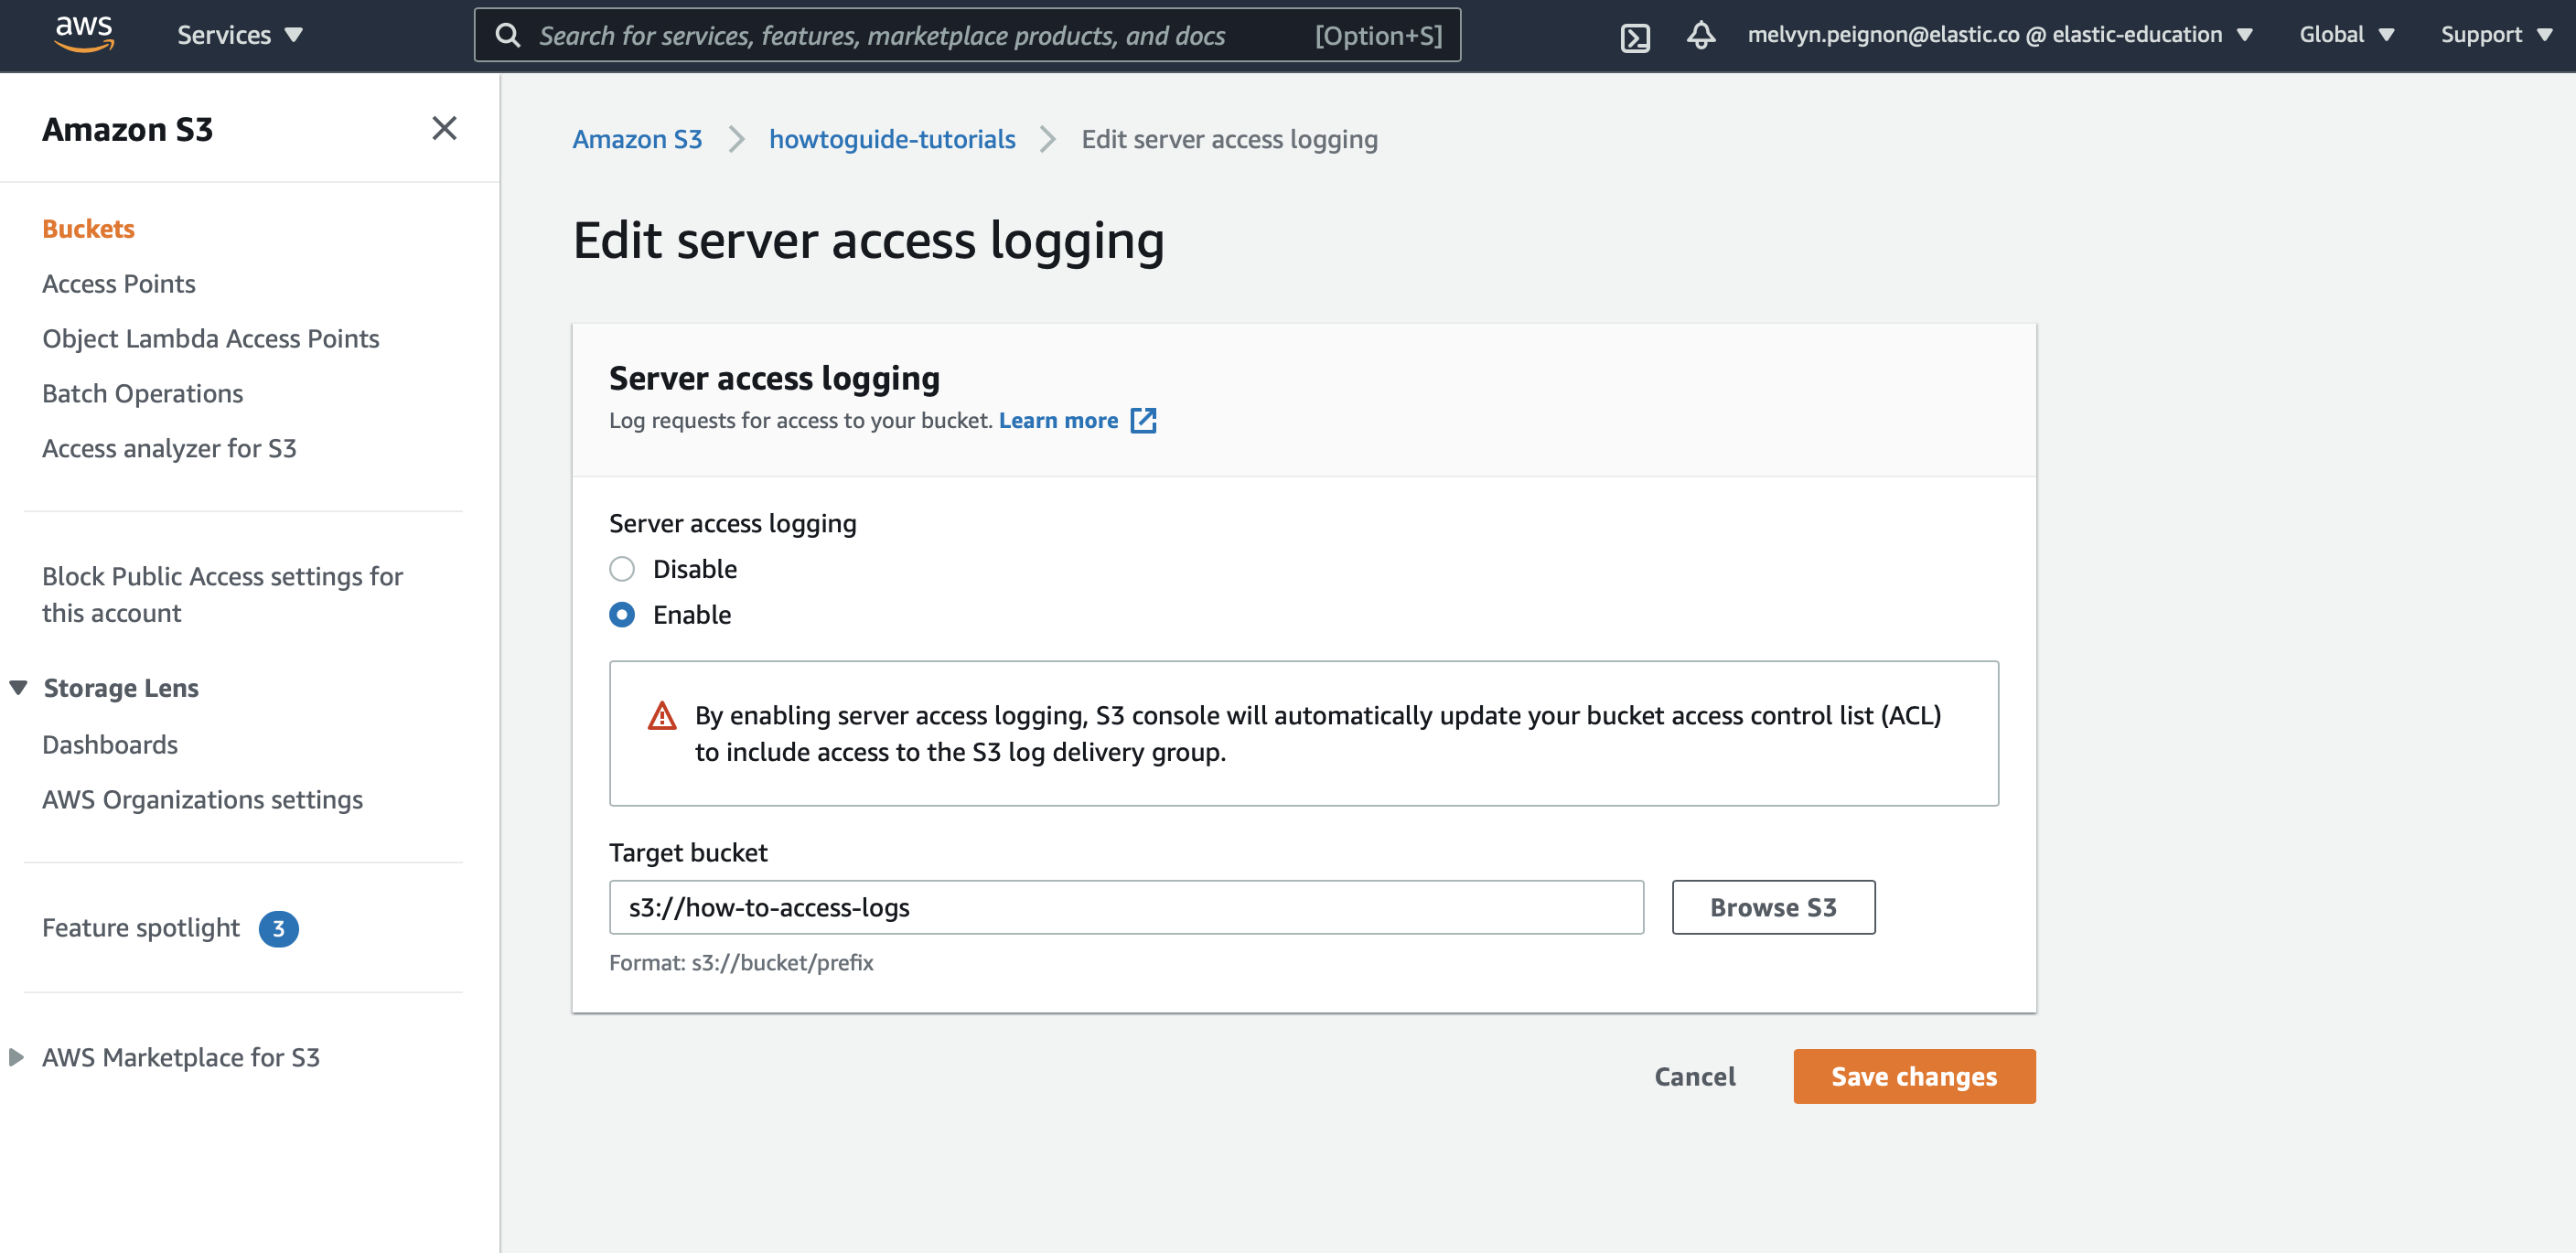 Enabling Server Access Logging